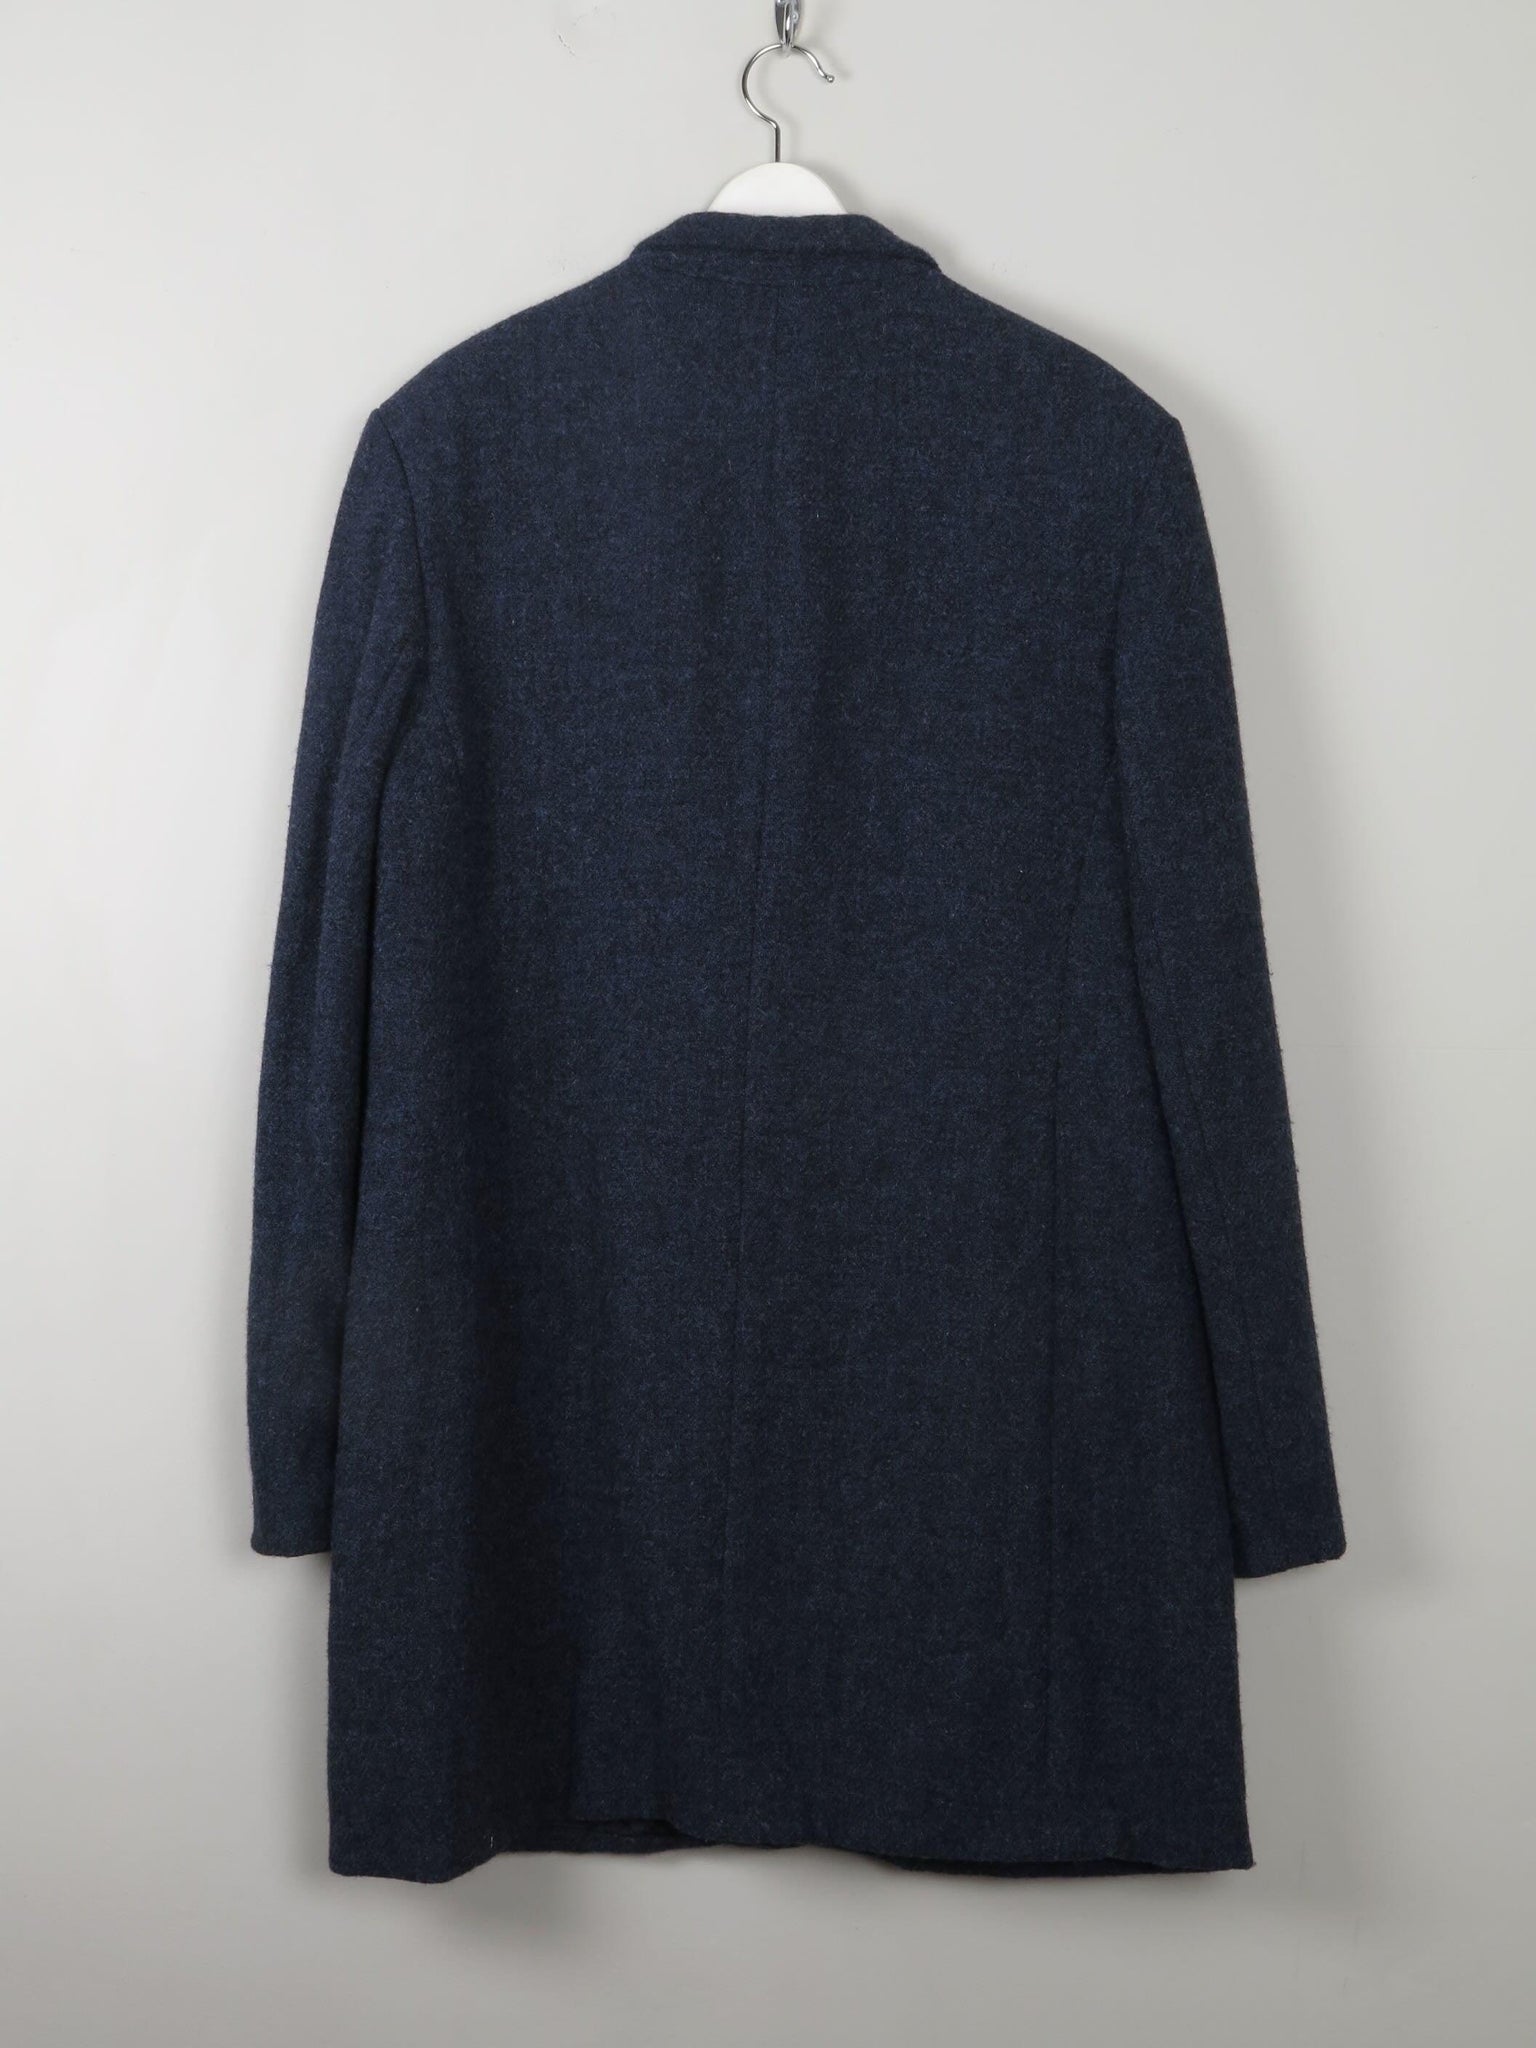 Women's Blue Harris tweed Coat L/XL - The Harlequin